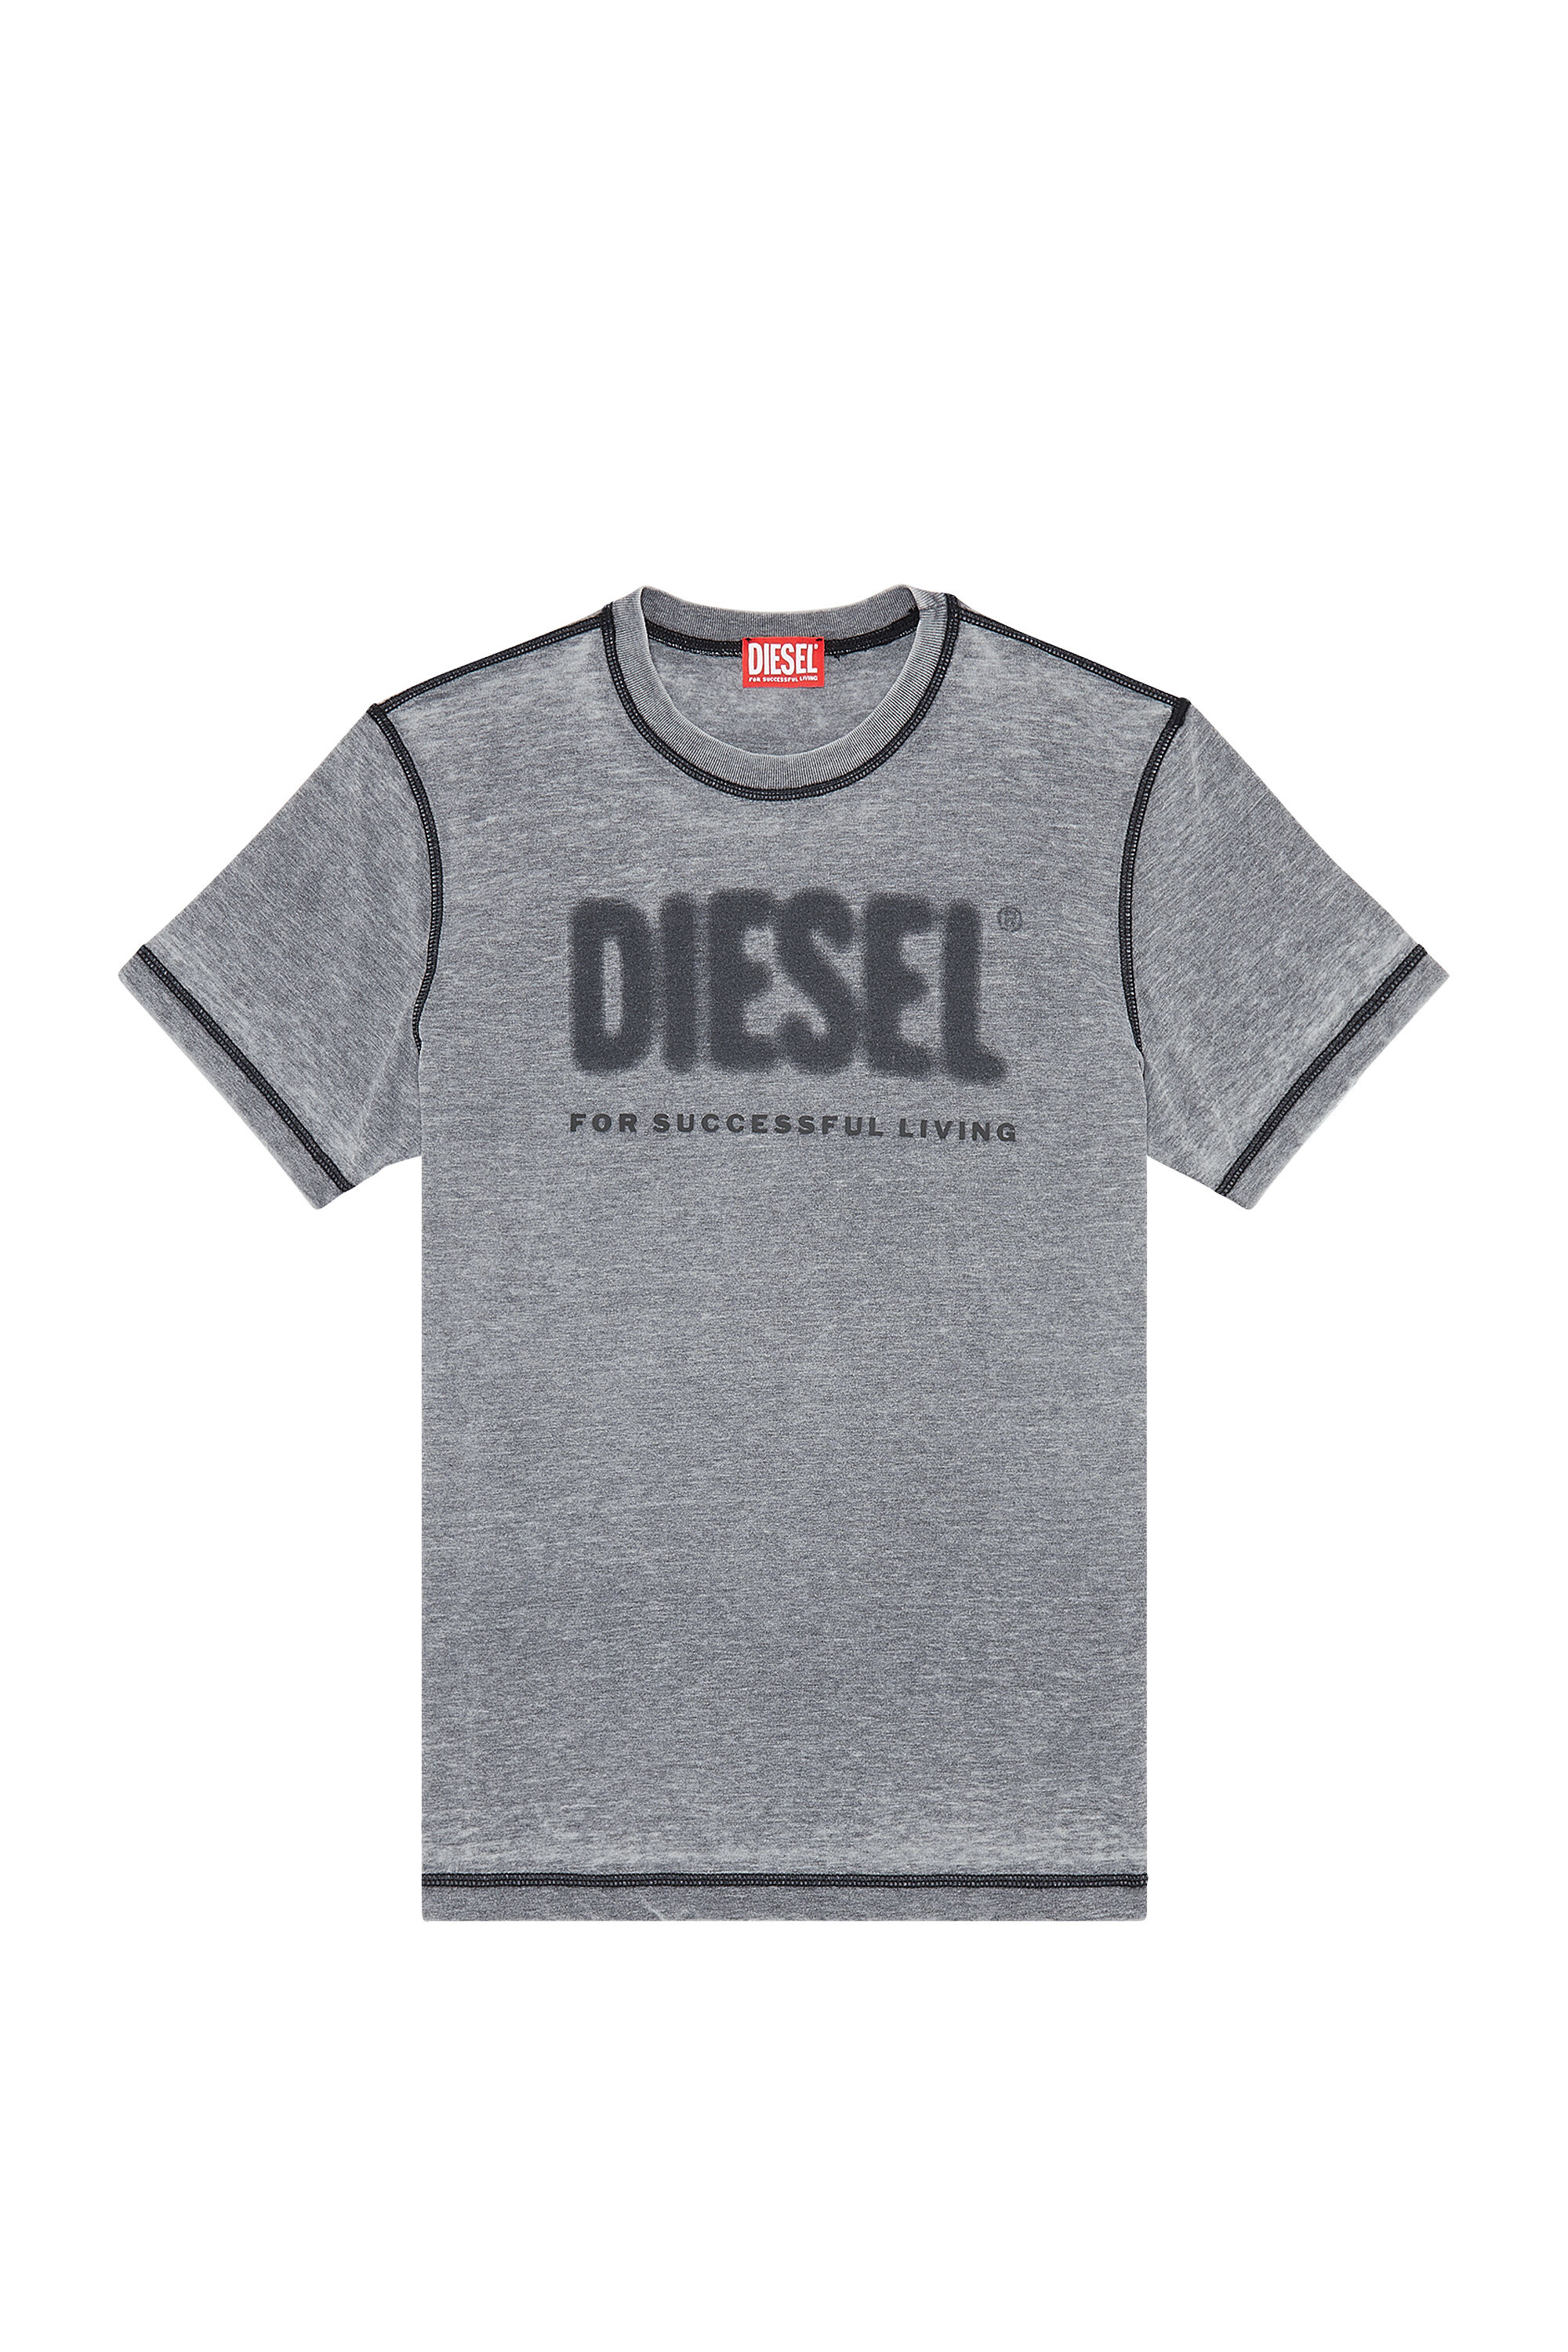 Men's T-shirt with burn-out logo | Grey | Diesel